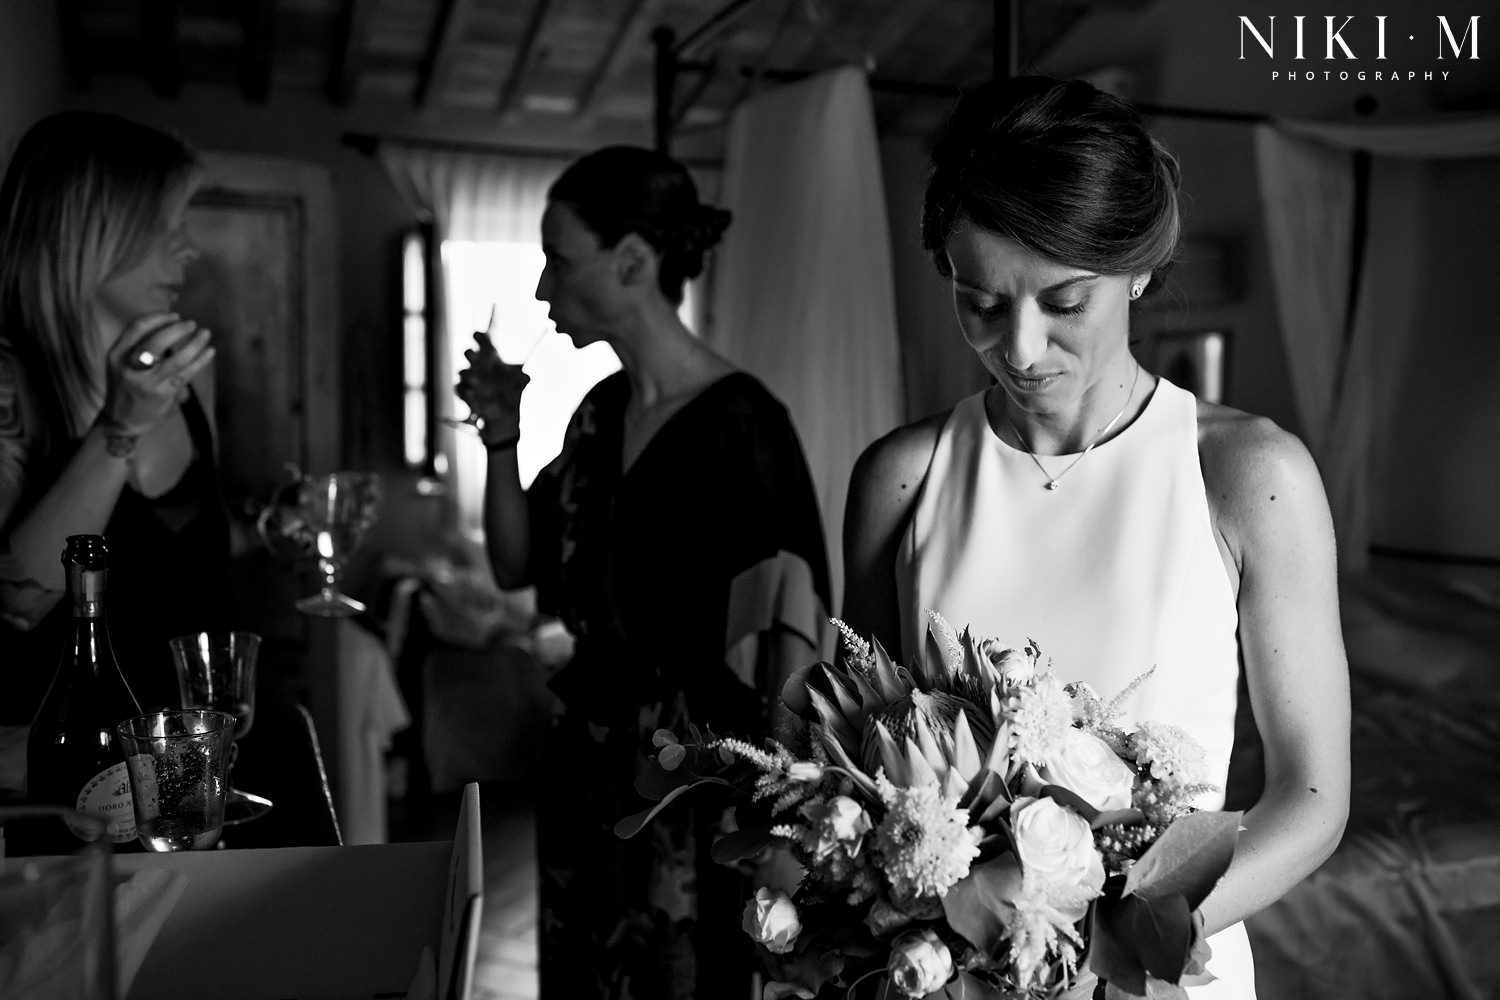 The Bride gets ready before the big day at her Tuscany wedding venue, Villa Ricrio